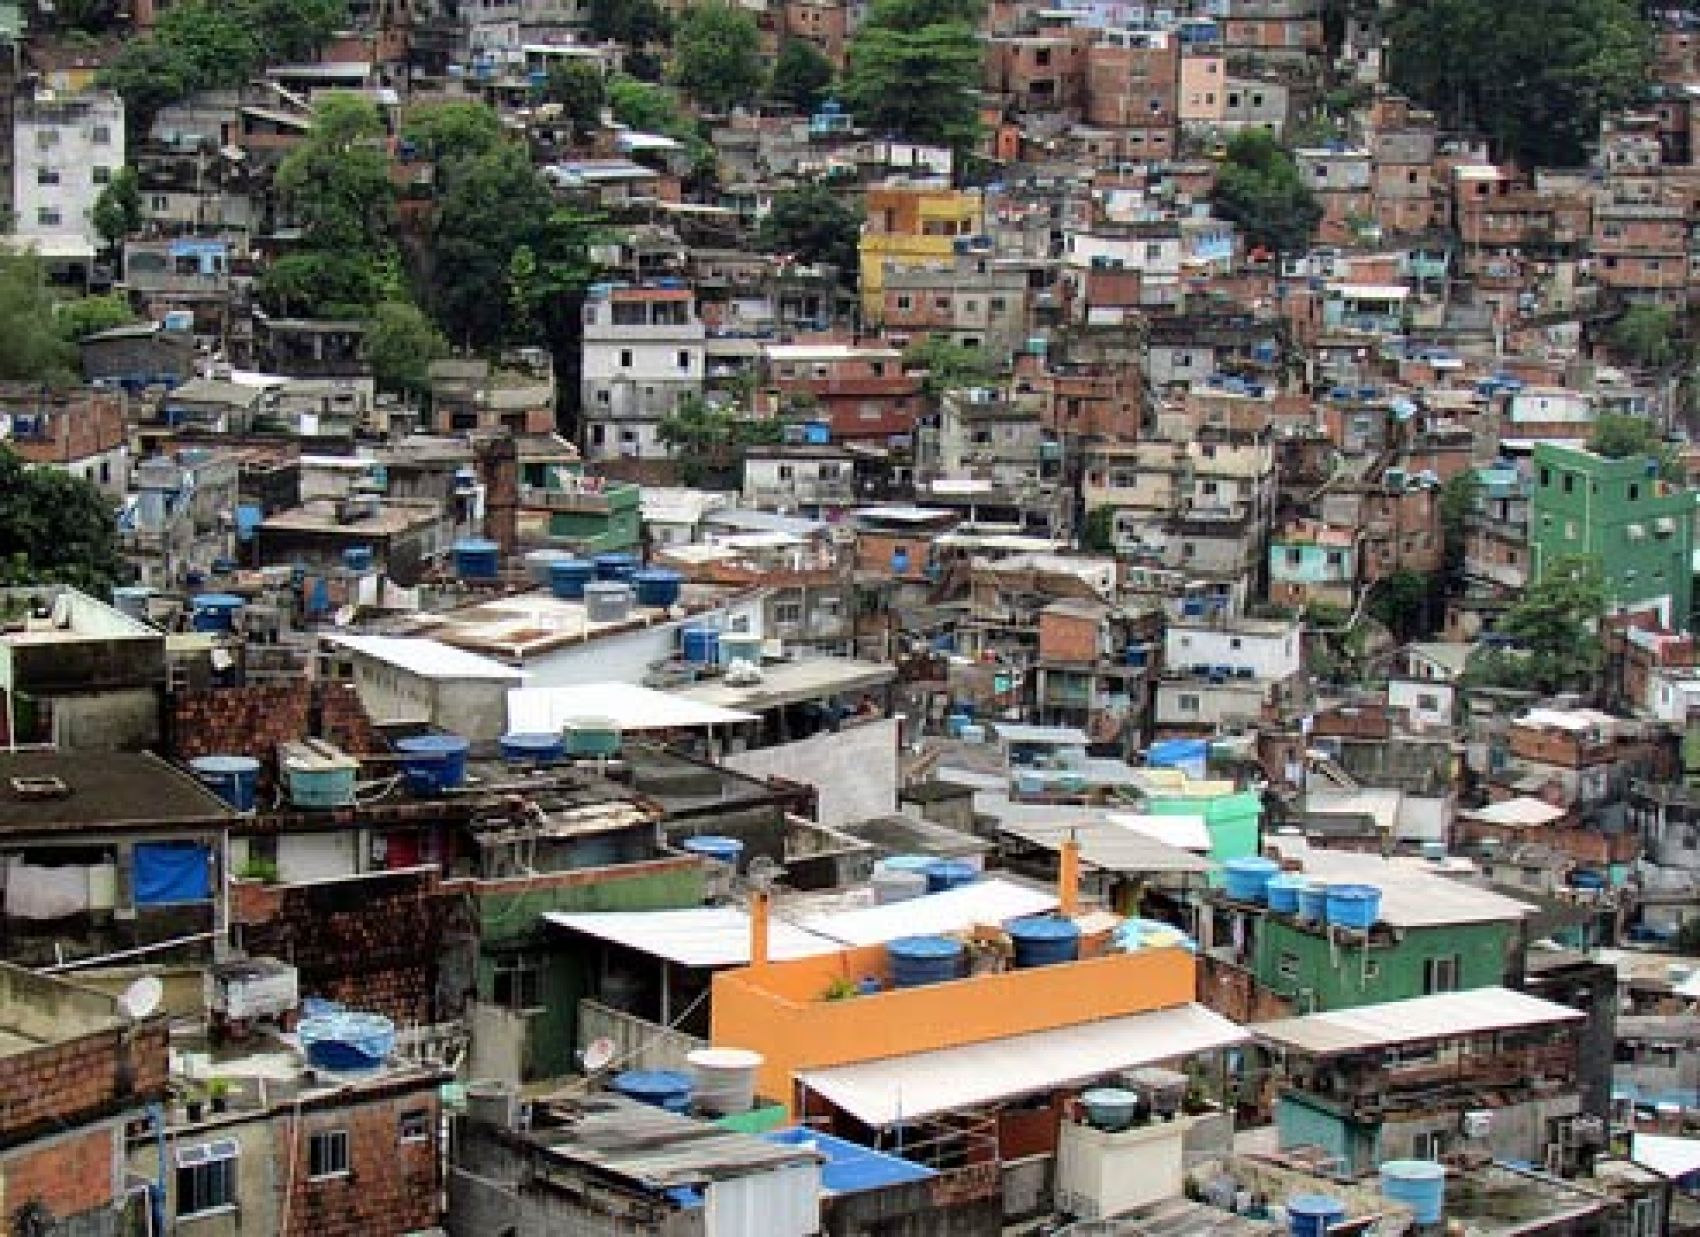 essay on unplanned urbanization